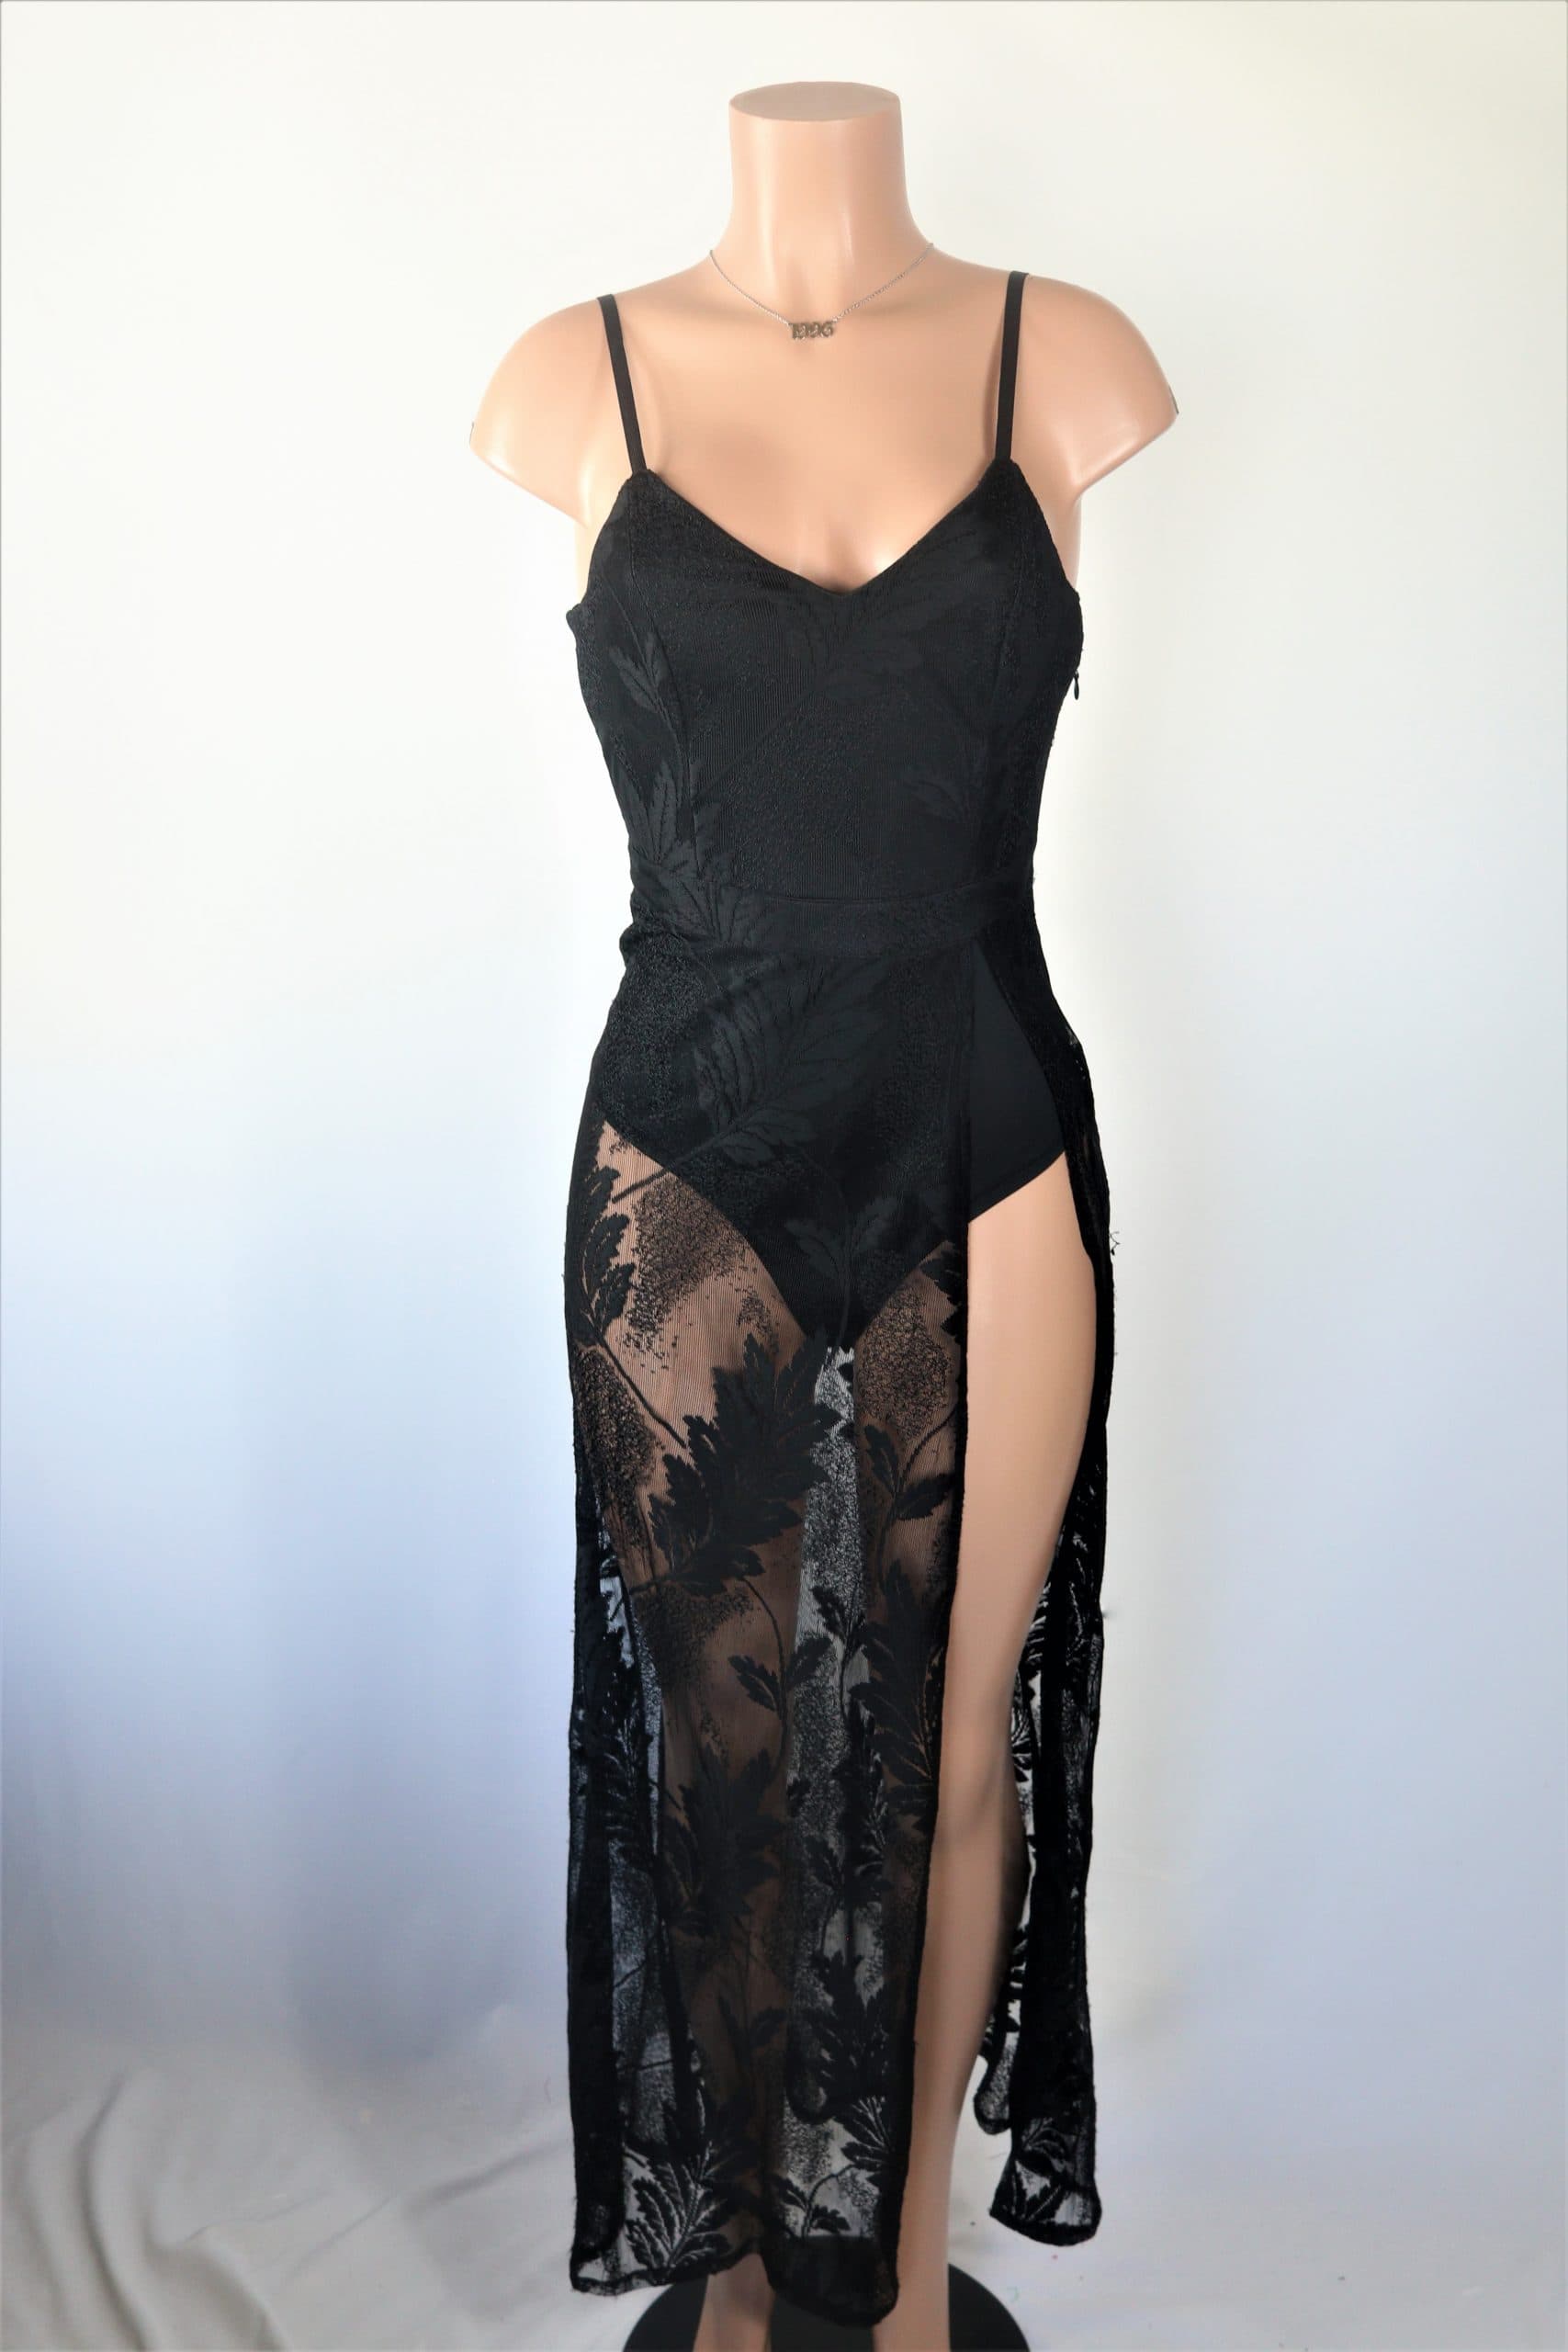 Lady Lace Dress - Black mesh long sexy bodysuit lace dress with slit.